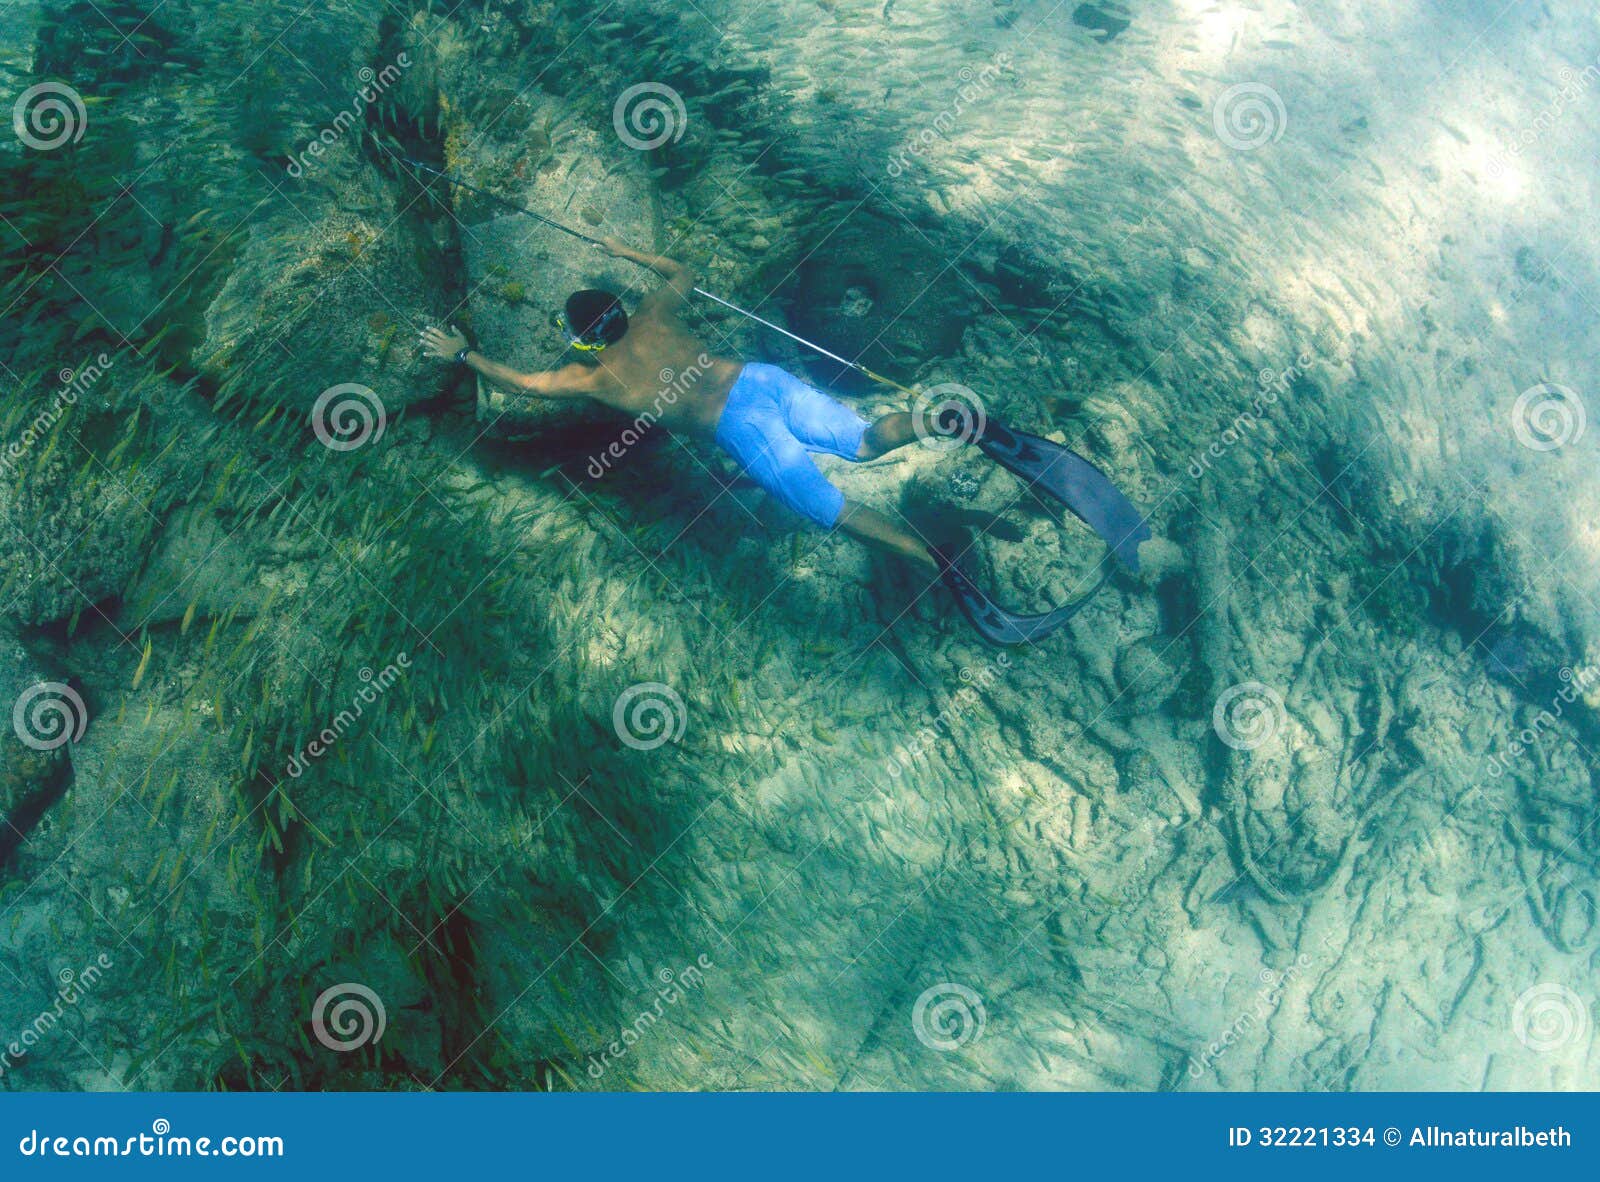 https://thumbs.dreamstime.com/z/man-spearfishing-spear-pole-underwater-bahamas-32221334.jpg